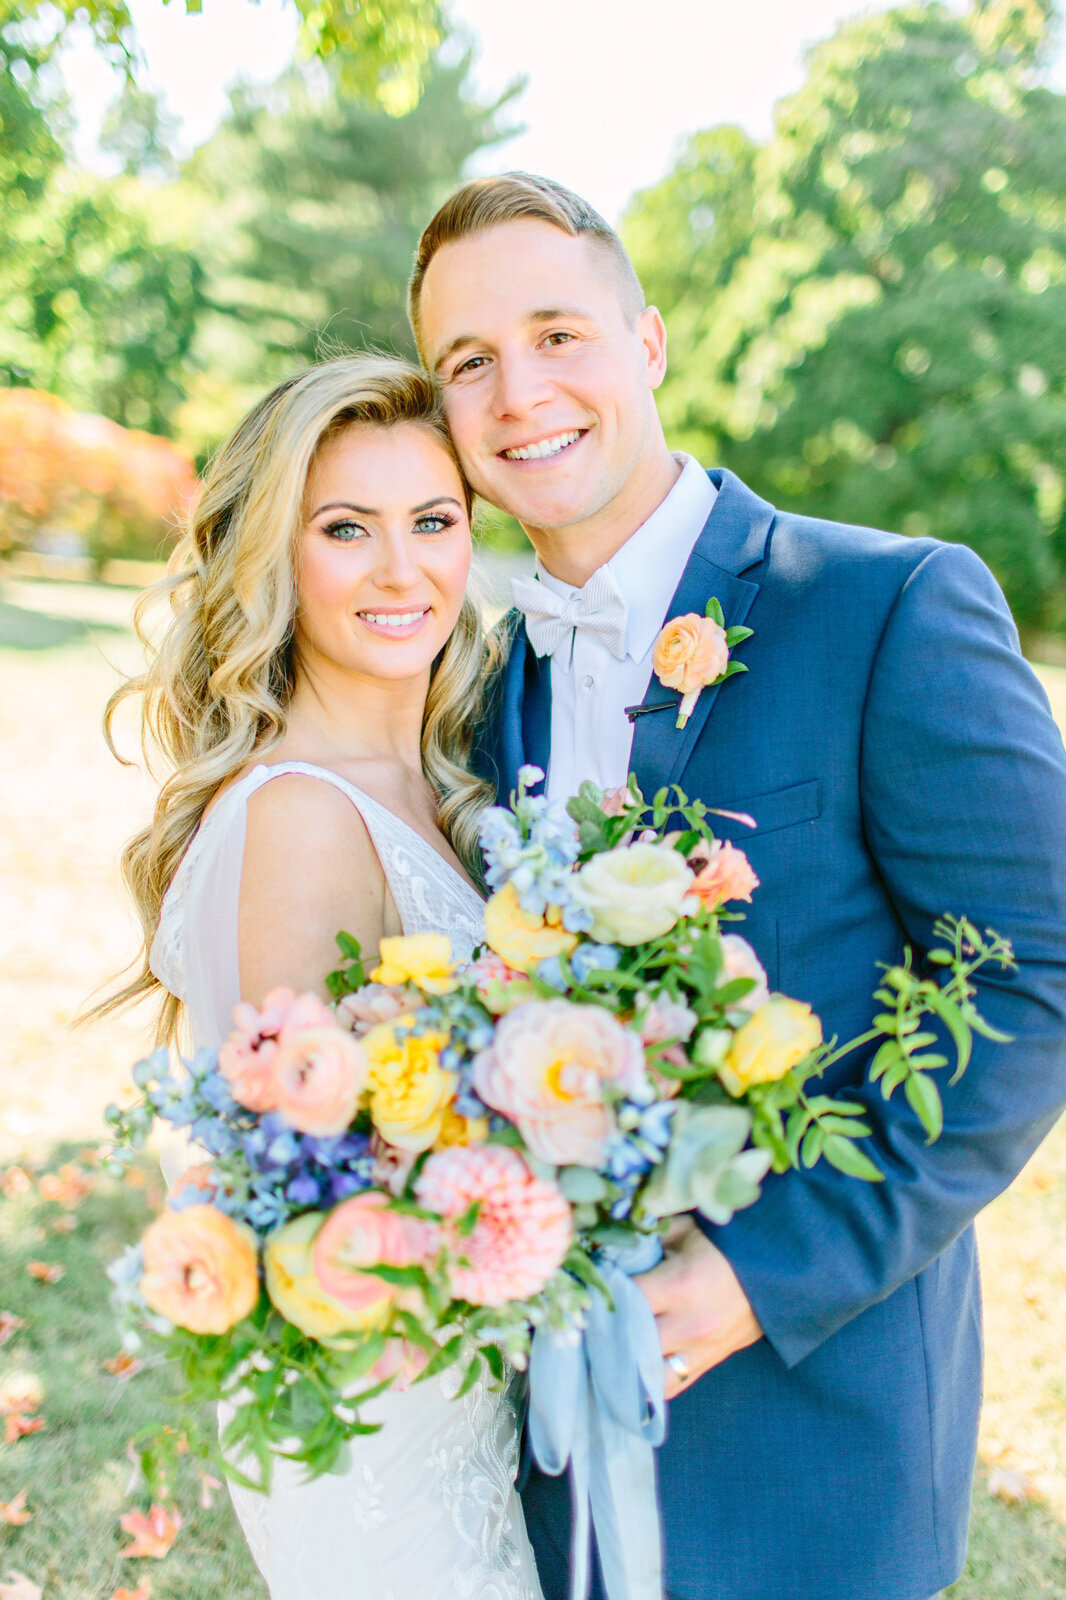 Kate-Murtaugh-Events-wedding-bride-groom-first-look-summer-flowers-MA-event-planner